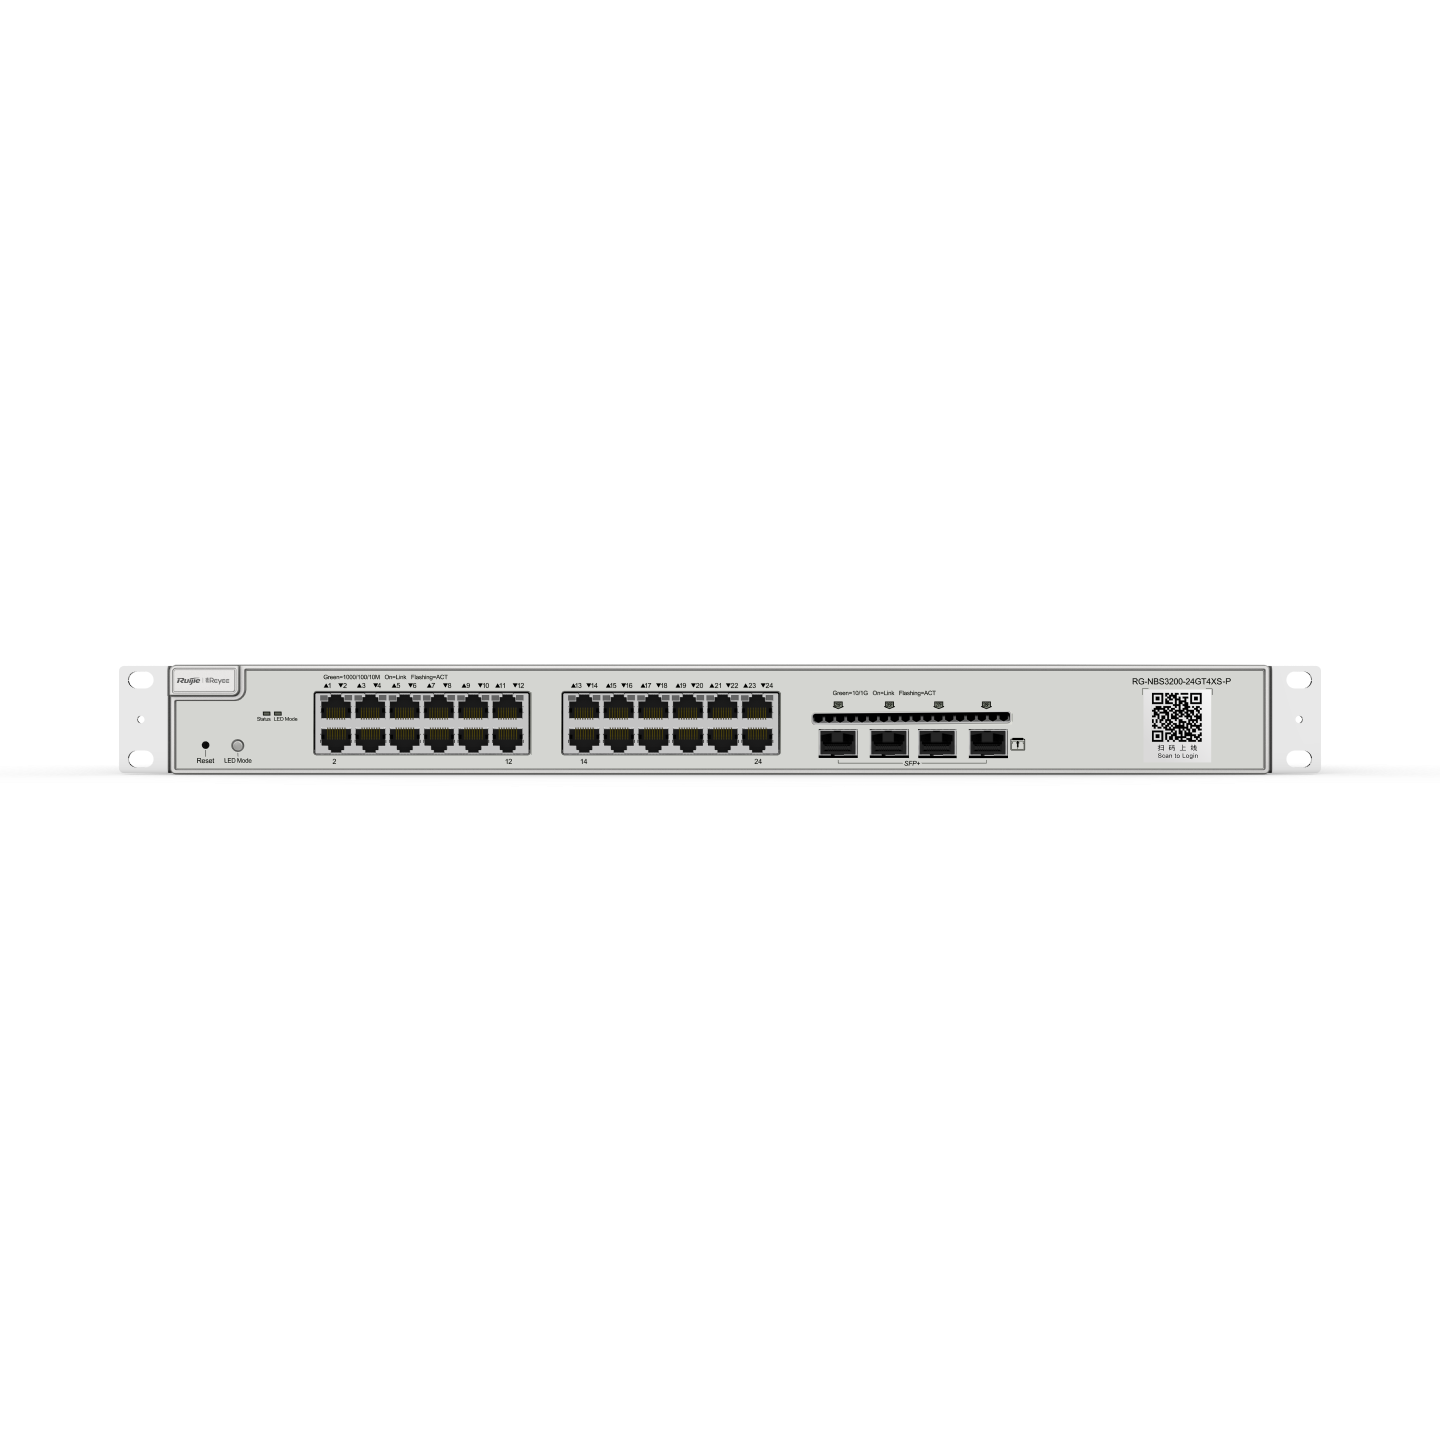 RG-NBS3200-24GT4XS-P, 24-Port Gigabit Layer 2 Cloud Managed PoE Switch, 4 * 10G Uplink